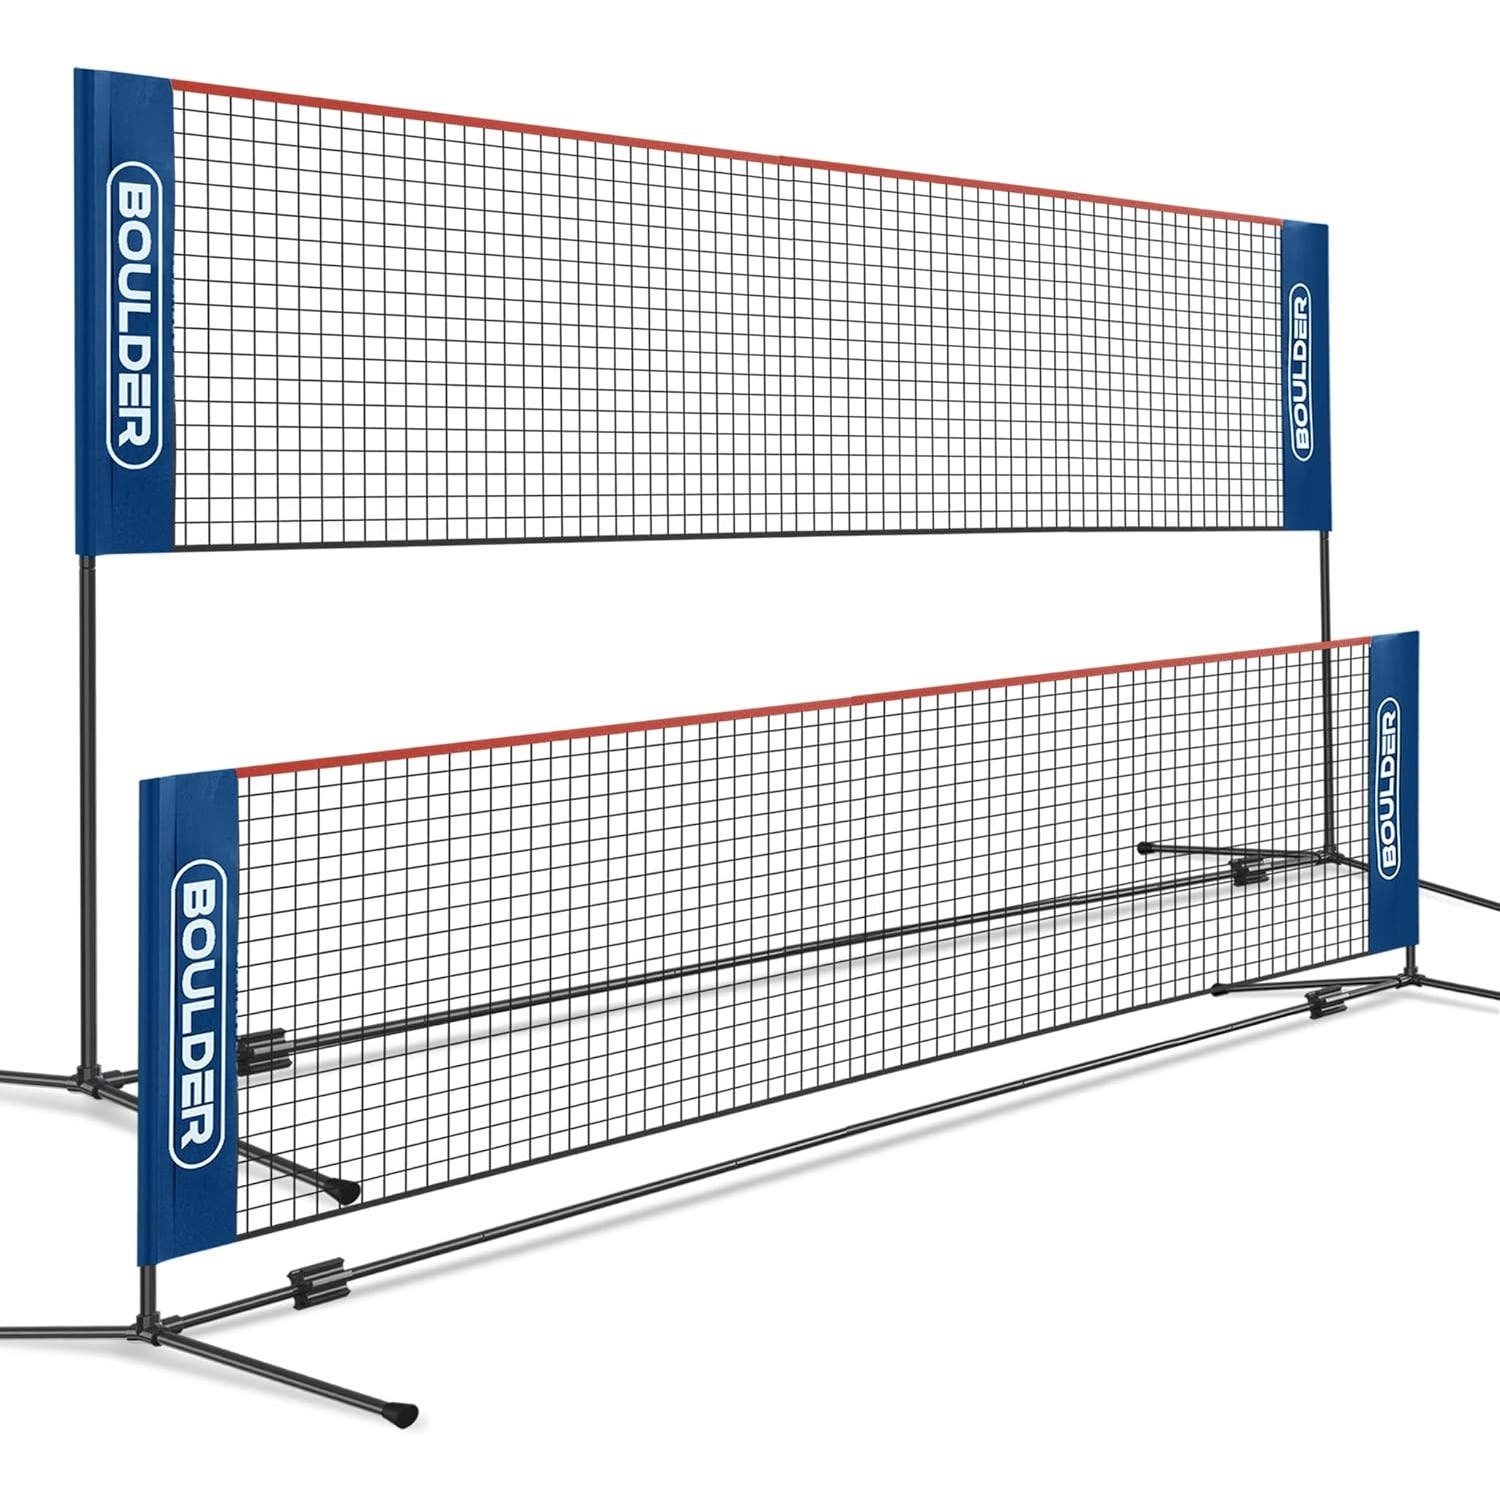 Boulder Badminton Pickleball Net - Adjustable Portable Net for Junior  F16 01750 2tJ9XVnHV